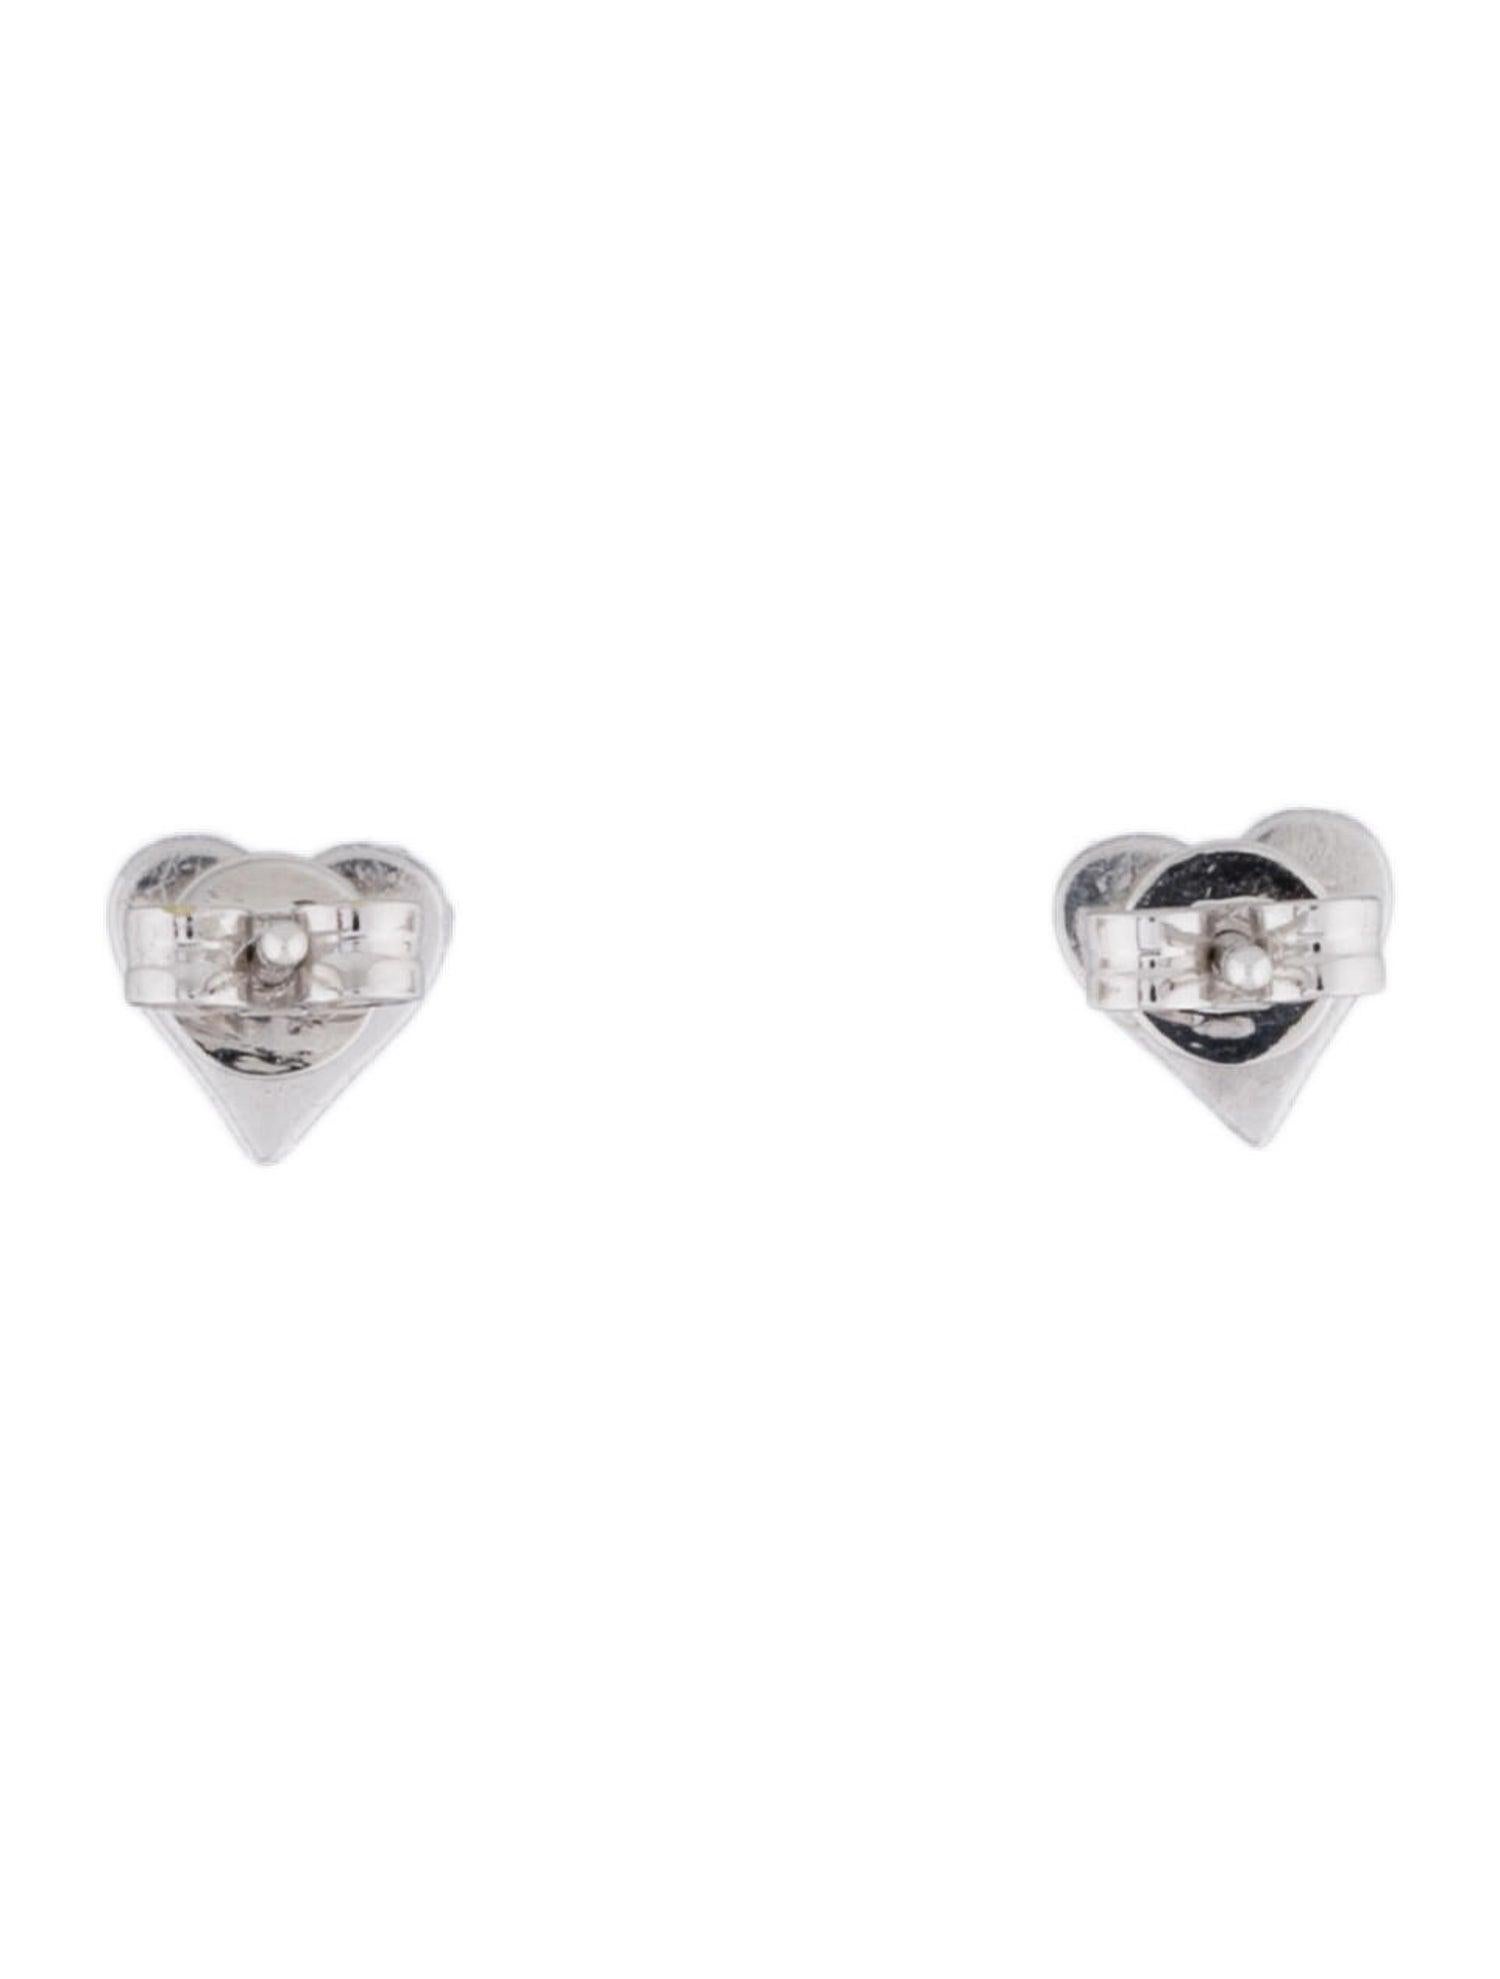 Contemporary 14 Karat White Gold 0.10 Carat Diamond Heart Earrings For Sale